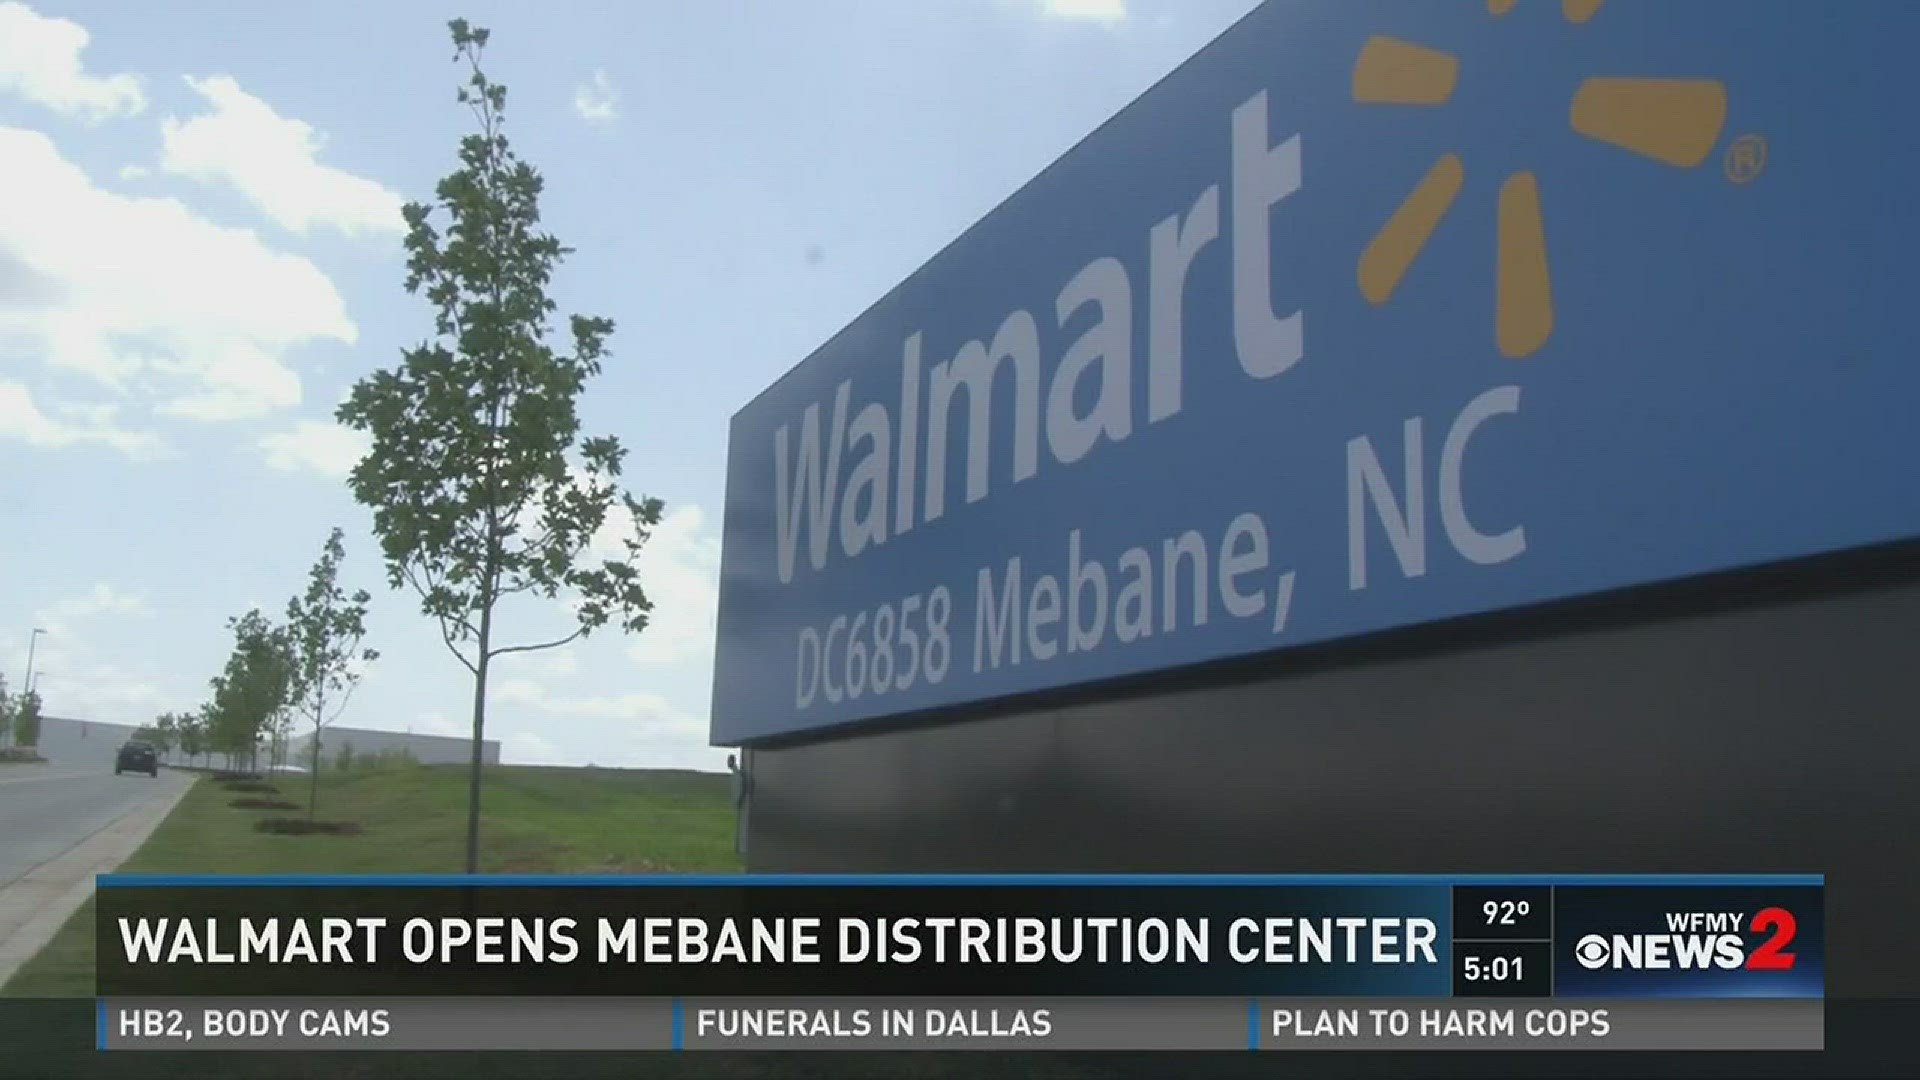 Walmart Opens Mebane Distribution Center